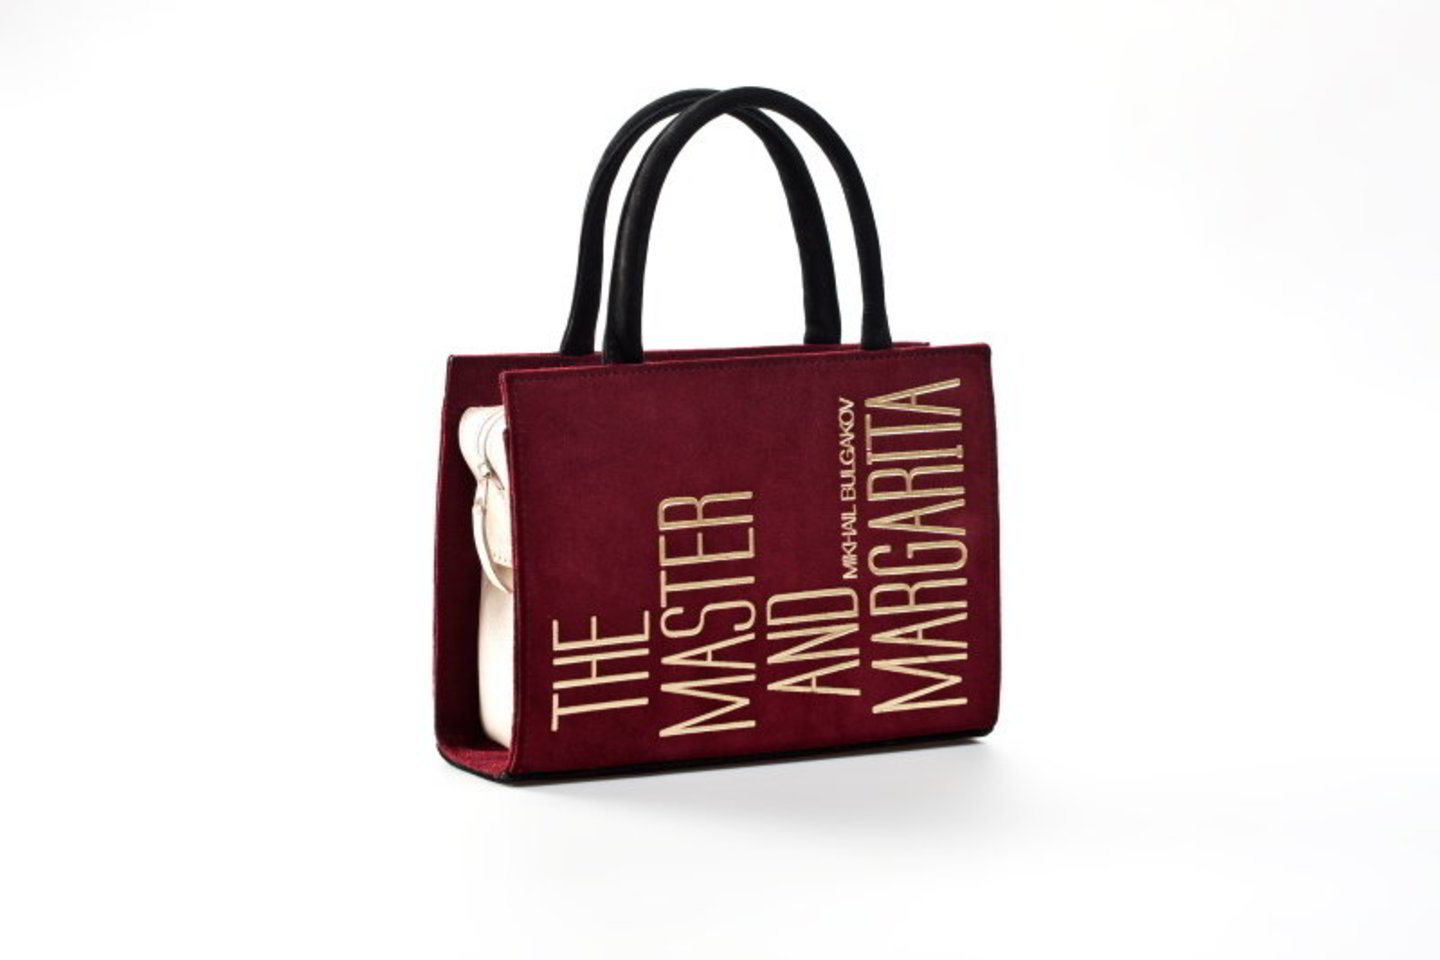 This bag is for. Bookstore сумки. Сумка книга. Bookstore сумка кожаная. Сумка книжный клуб.